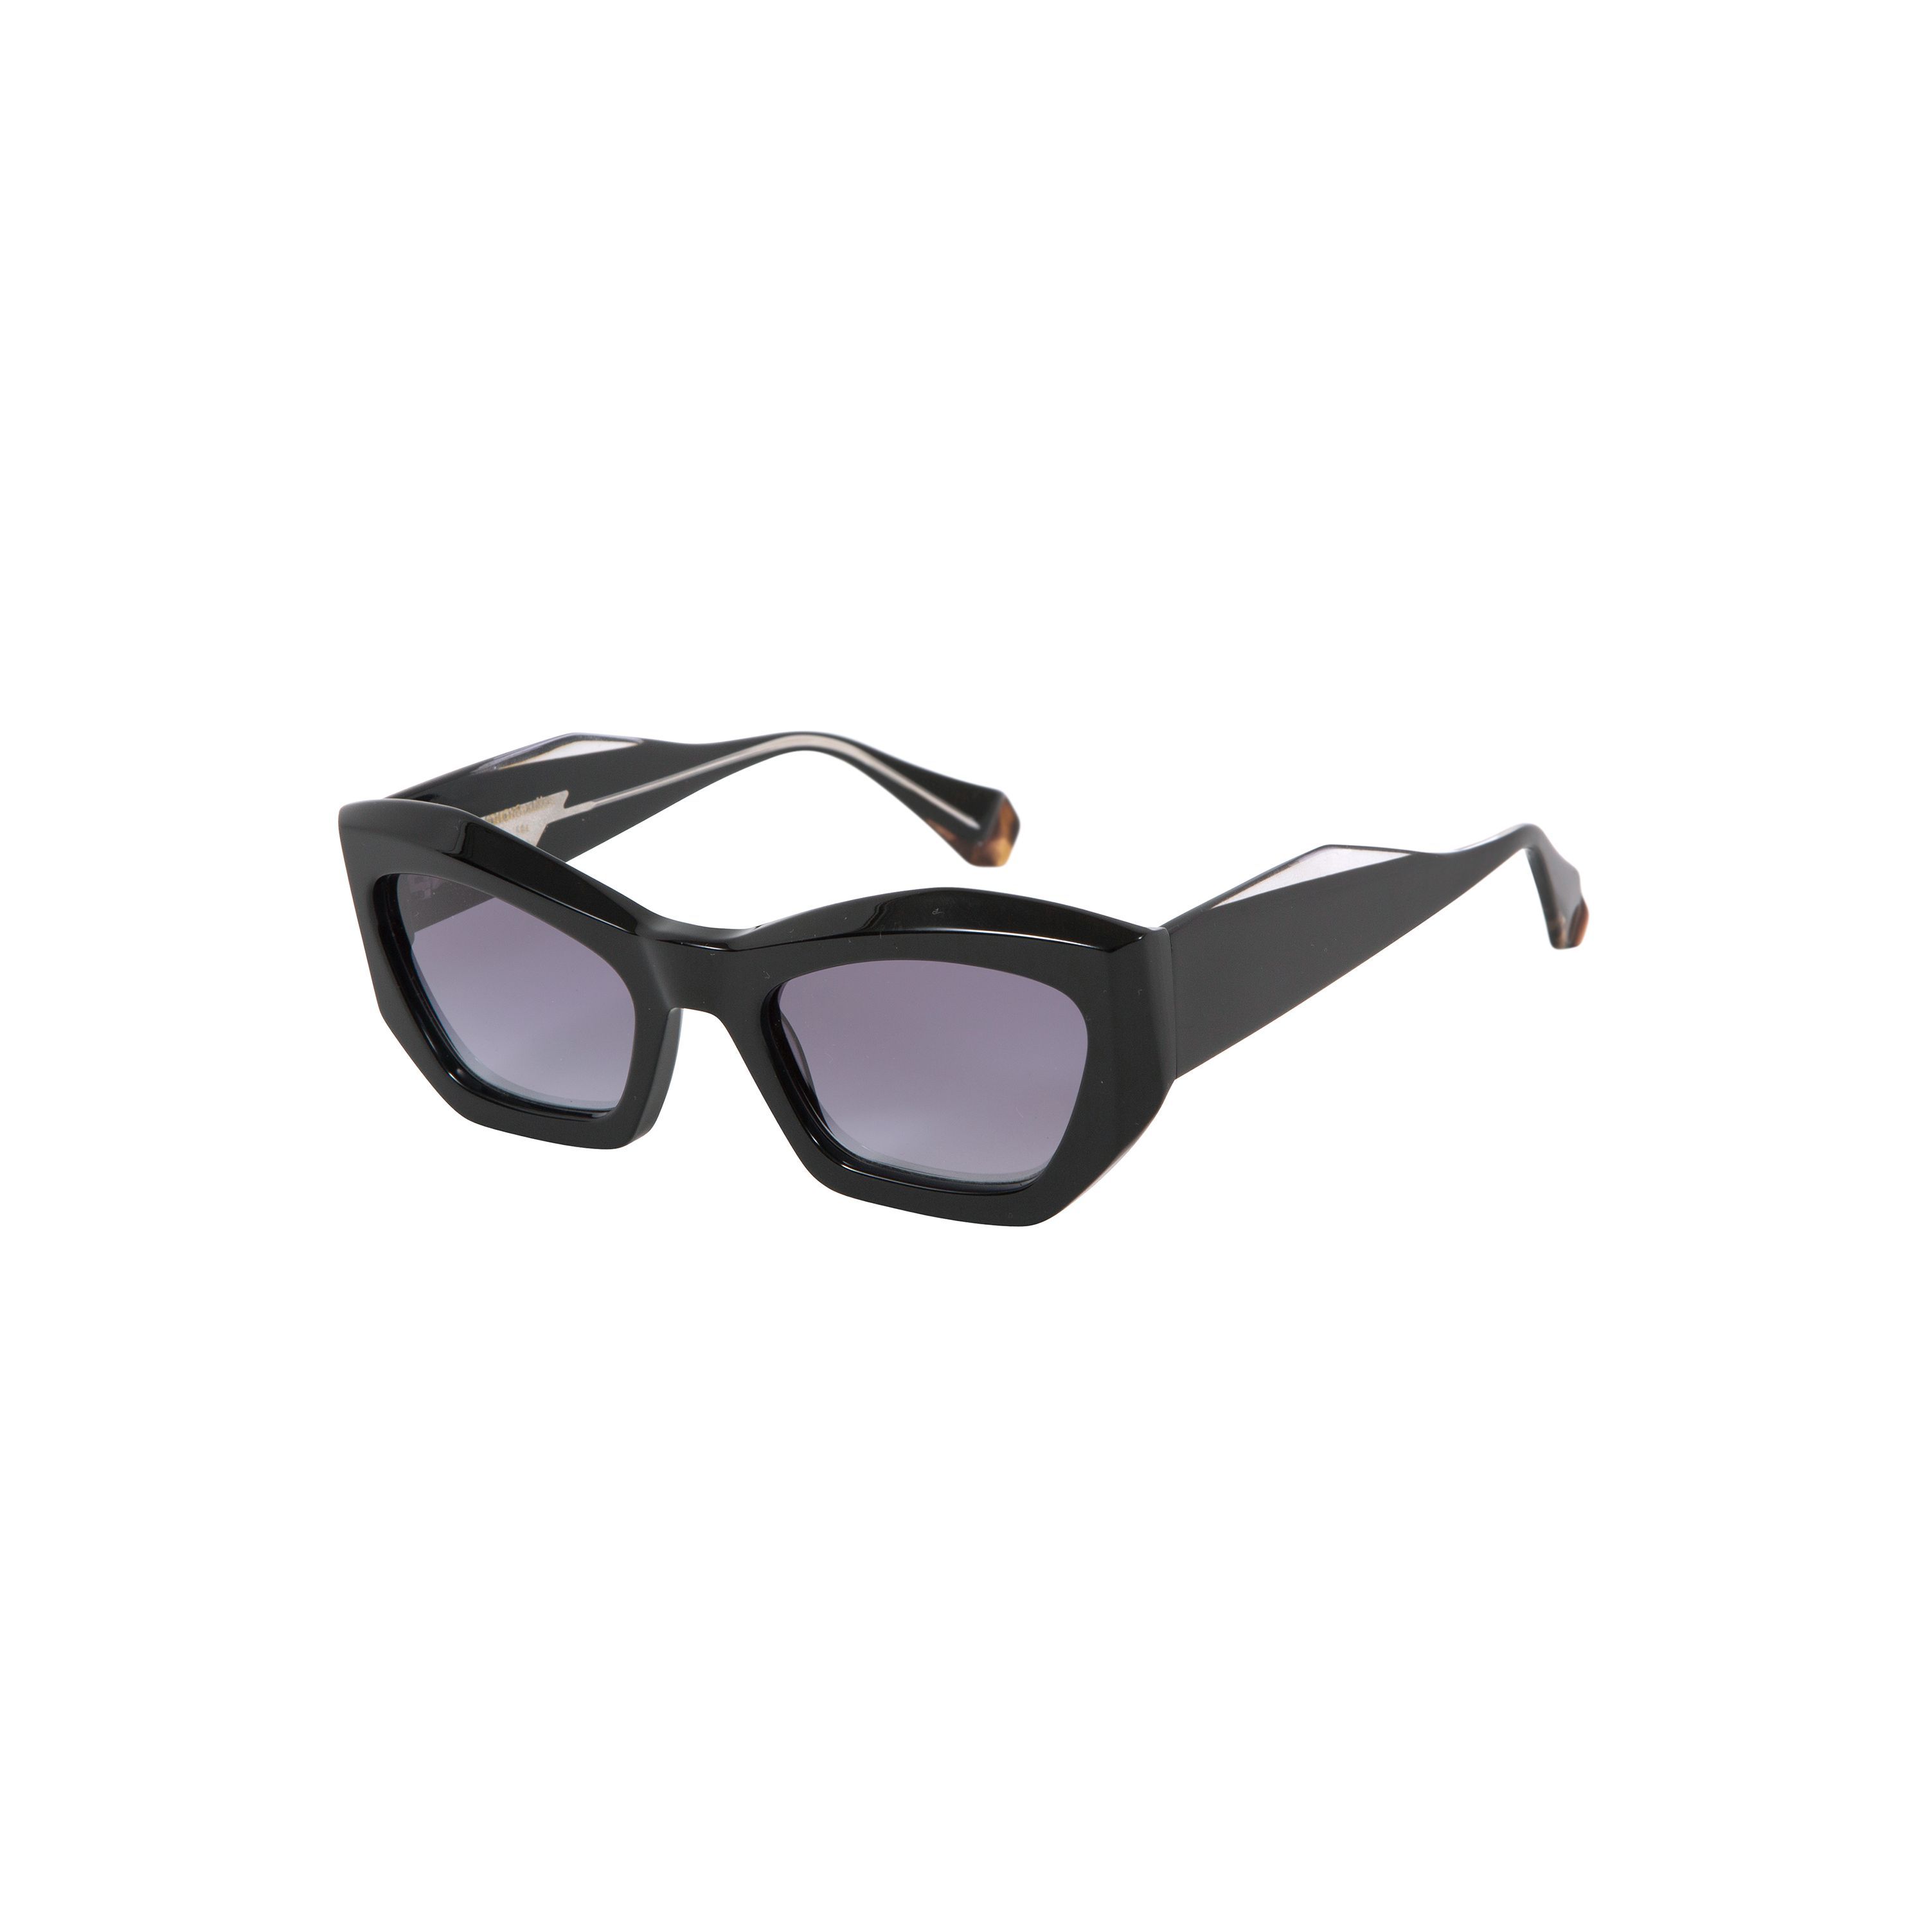 6736 Irregular Sunglasses 1 - size 53